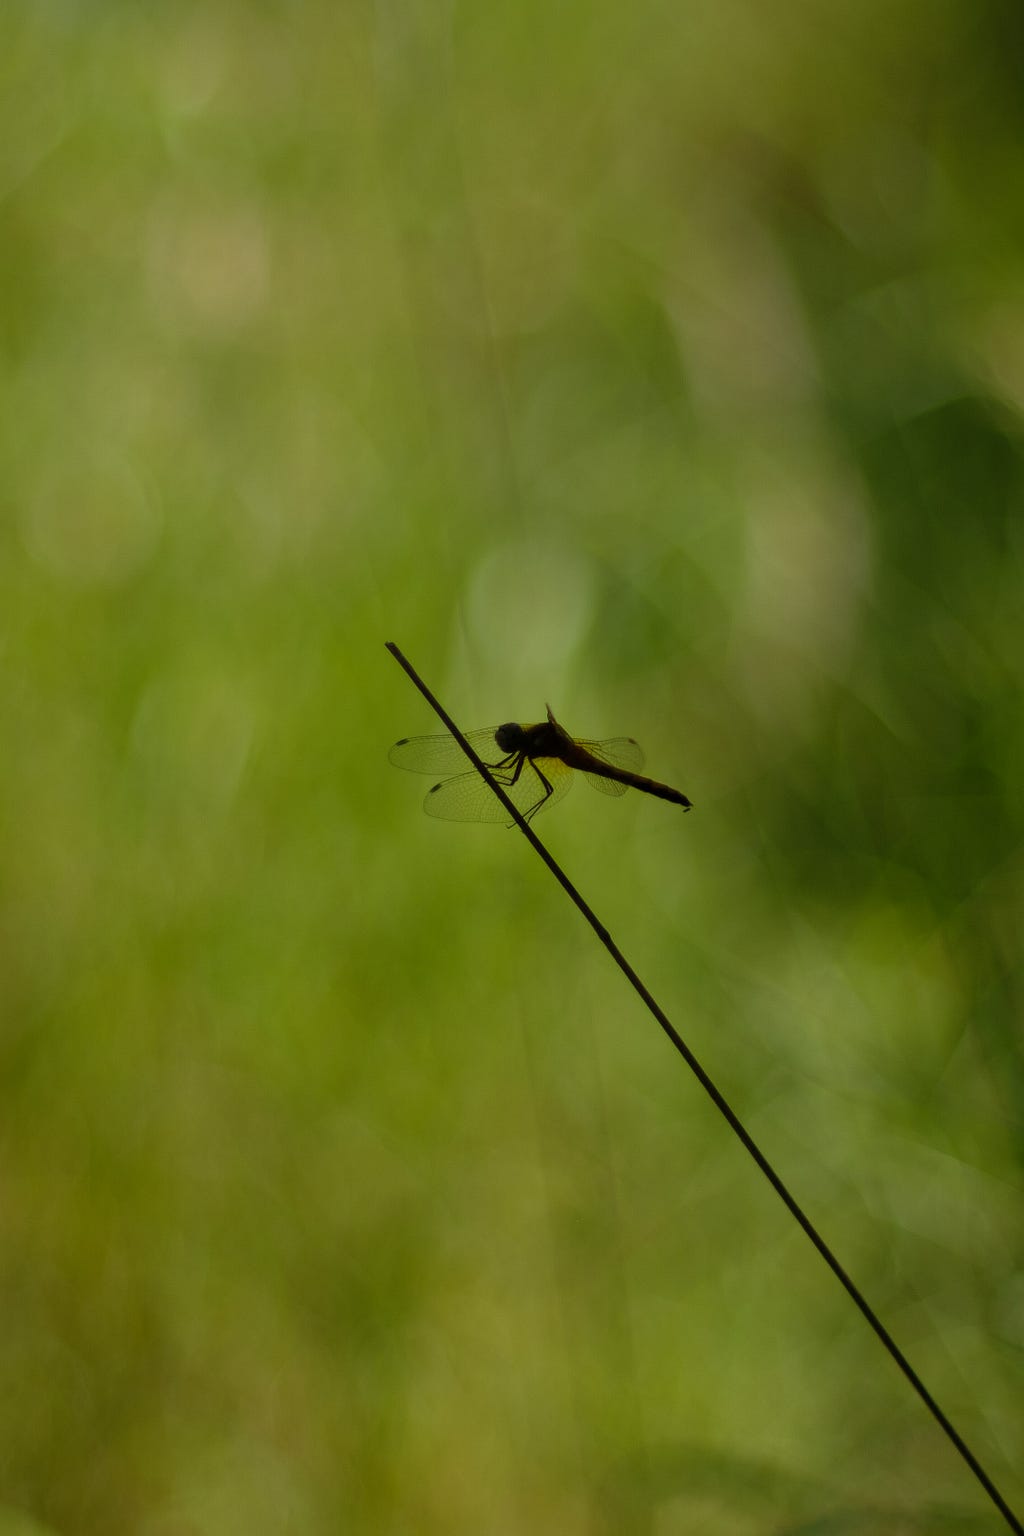 mosquito sitting on stem